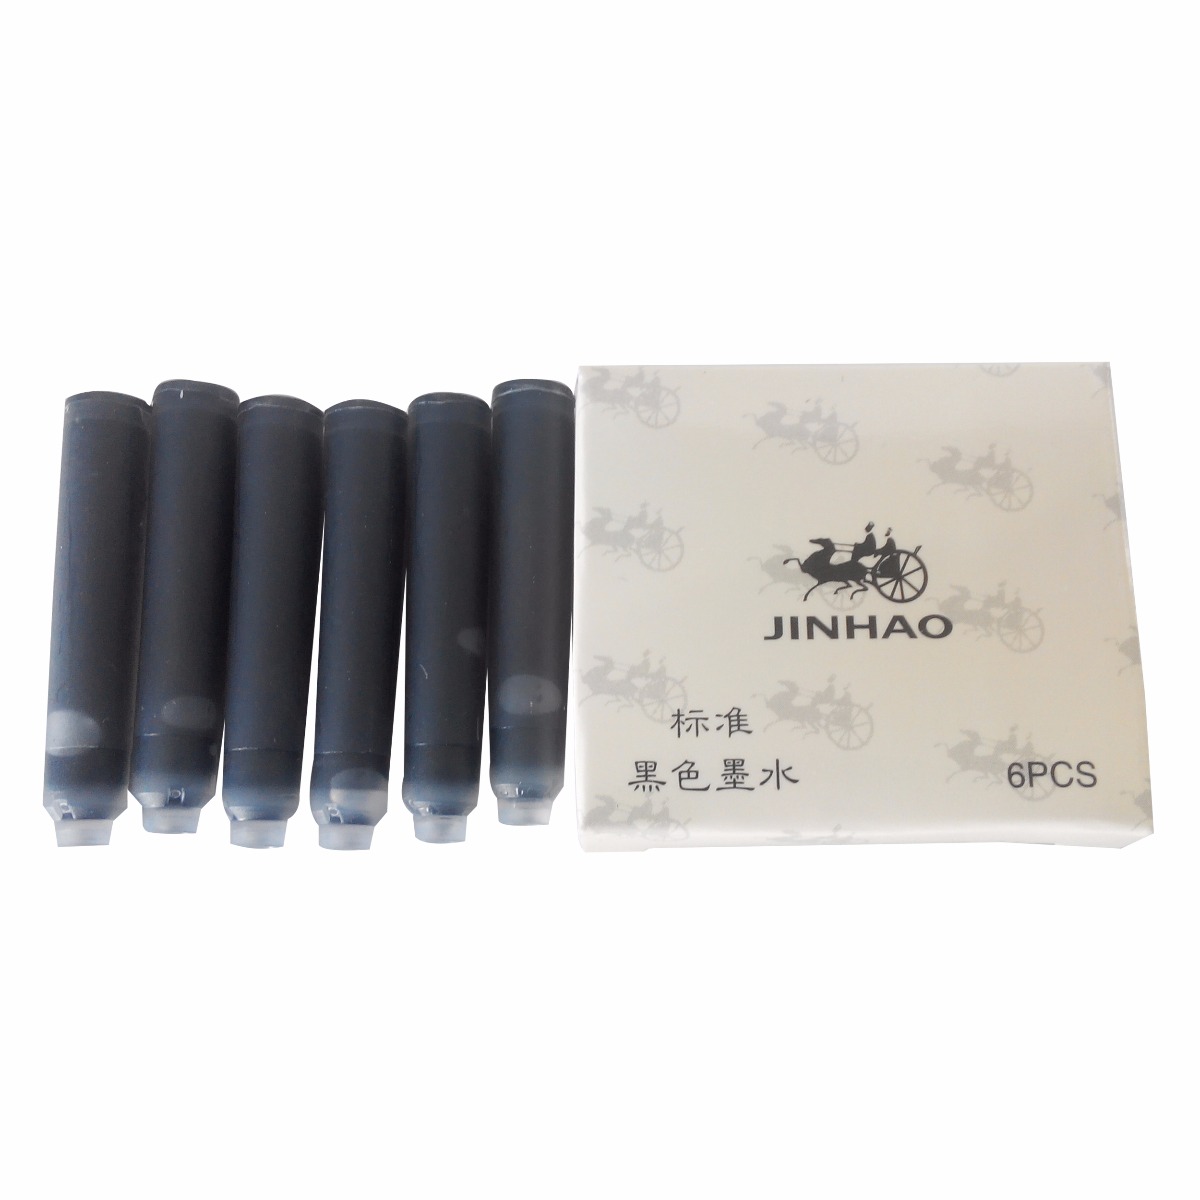 Jinhao Model: 70534  A set of 6 pcs Black ink cartridge